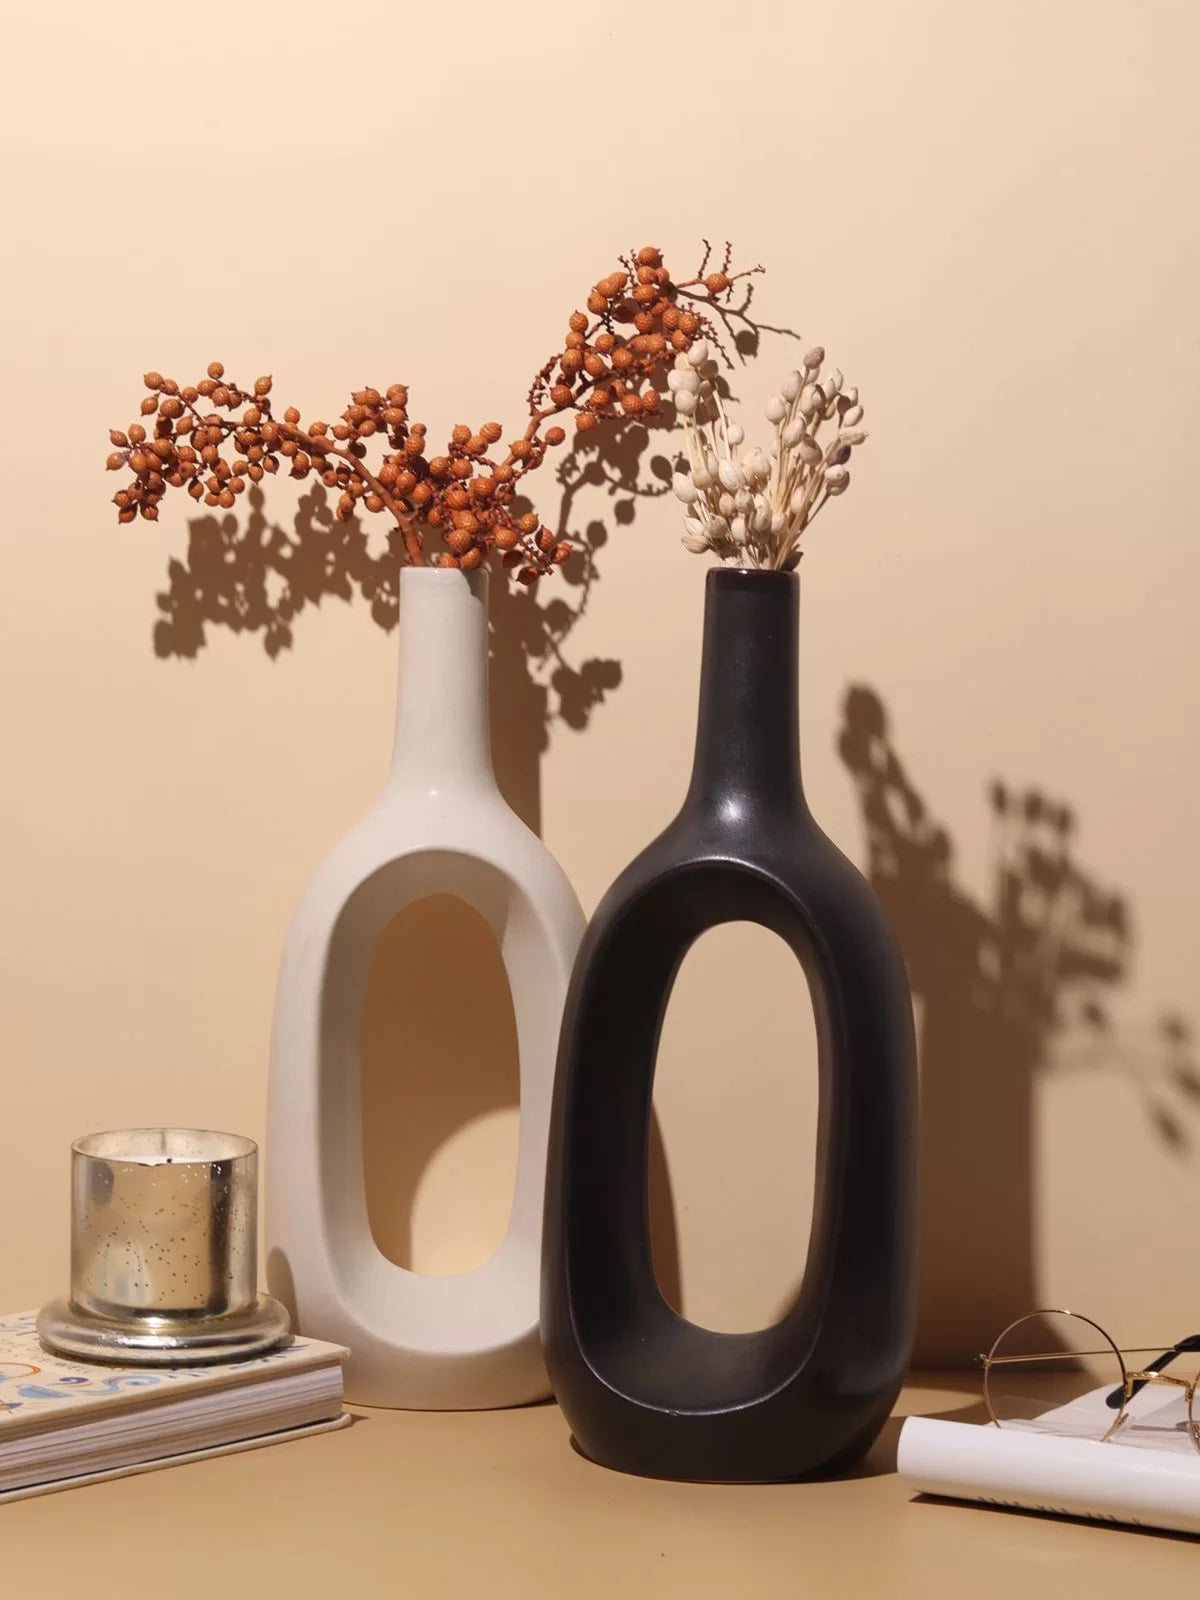 Hollow Minimalist Vase (12inches)